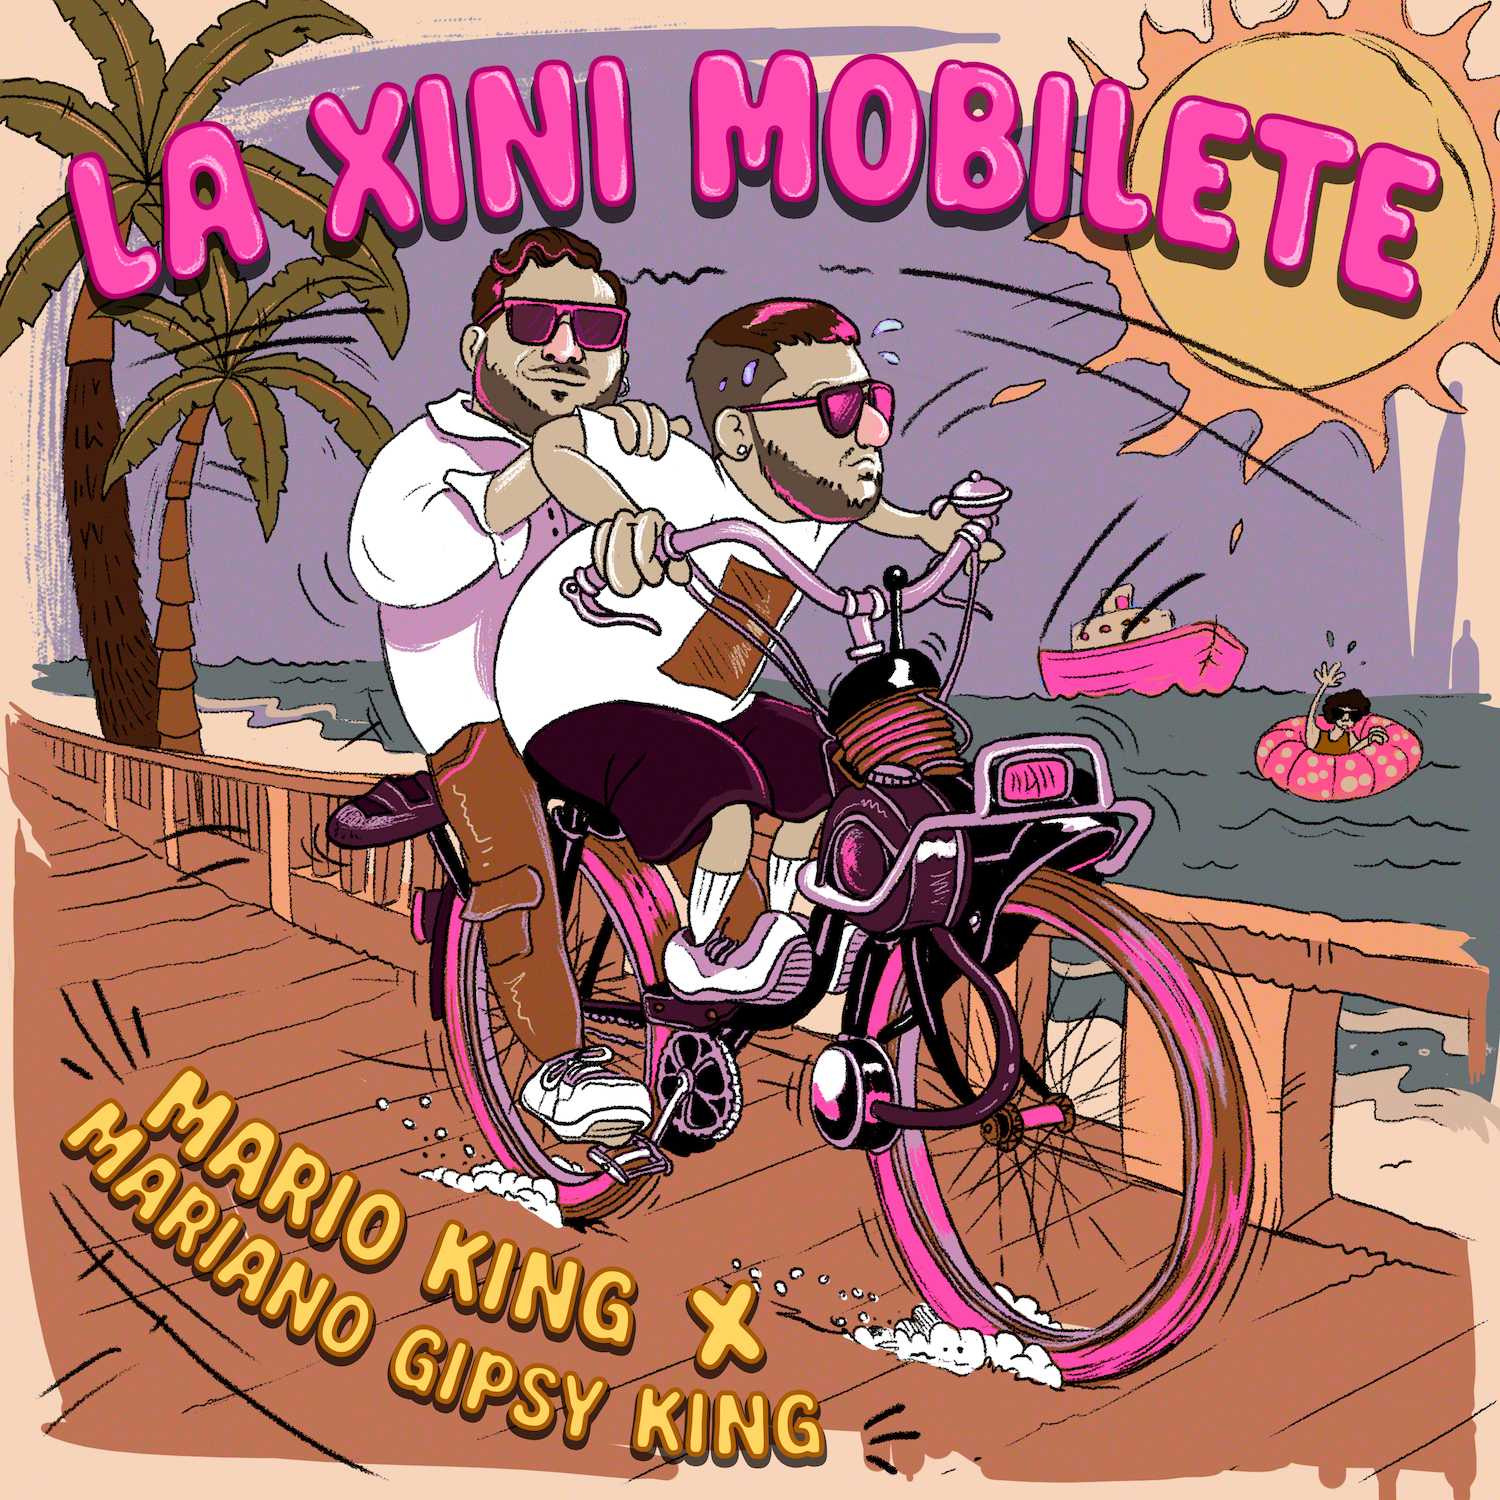 Mario King & Mariano Gipsy King - La xini mobilete